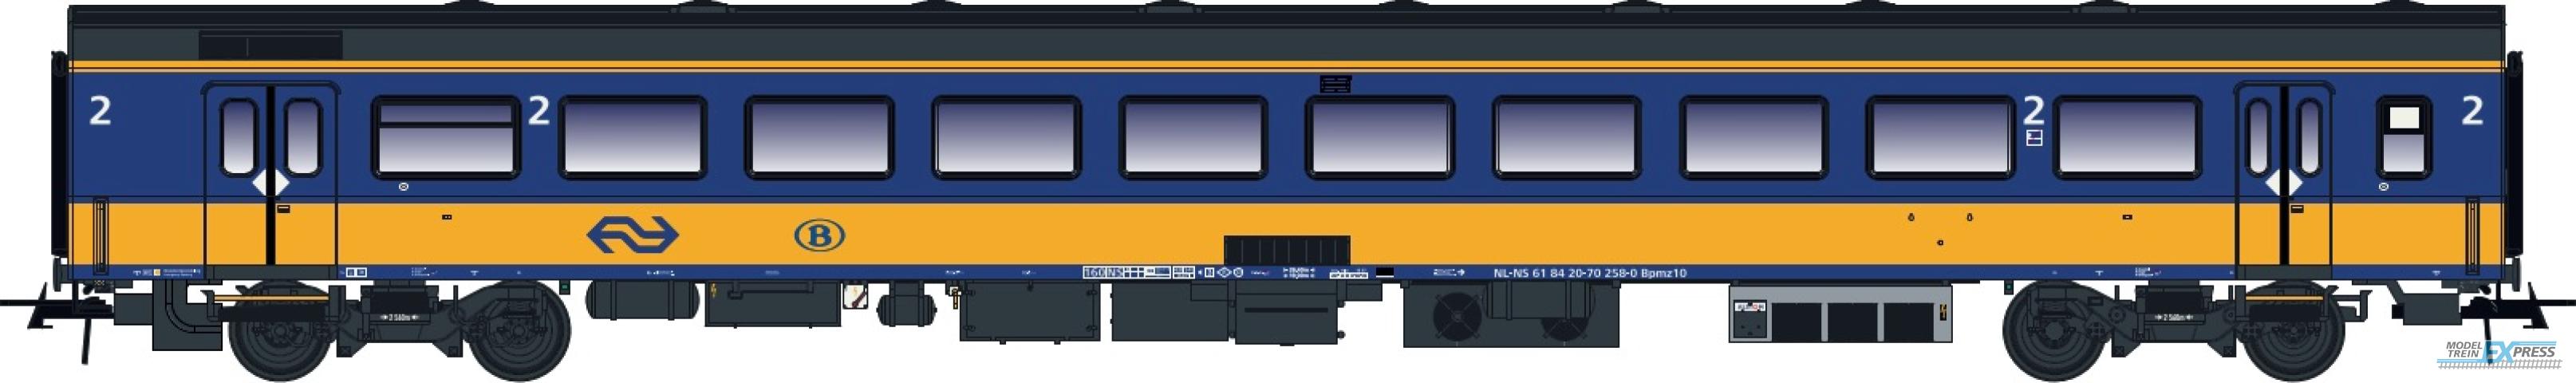 LS Models 44239 ICRmh Bpmz10, InterCity blauw, gele band, Benelux  /  Ep. V-VI  /  NS  /  HO  /  DC  /  1 P.